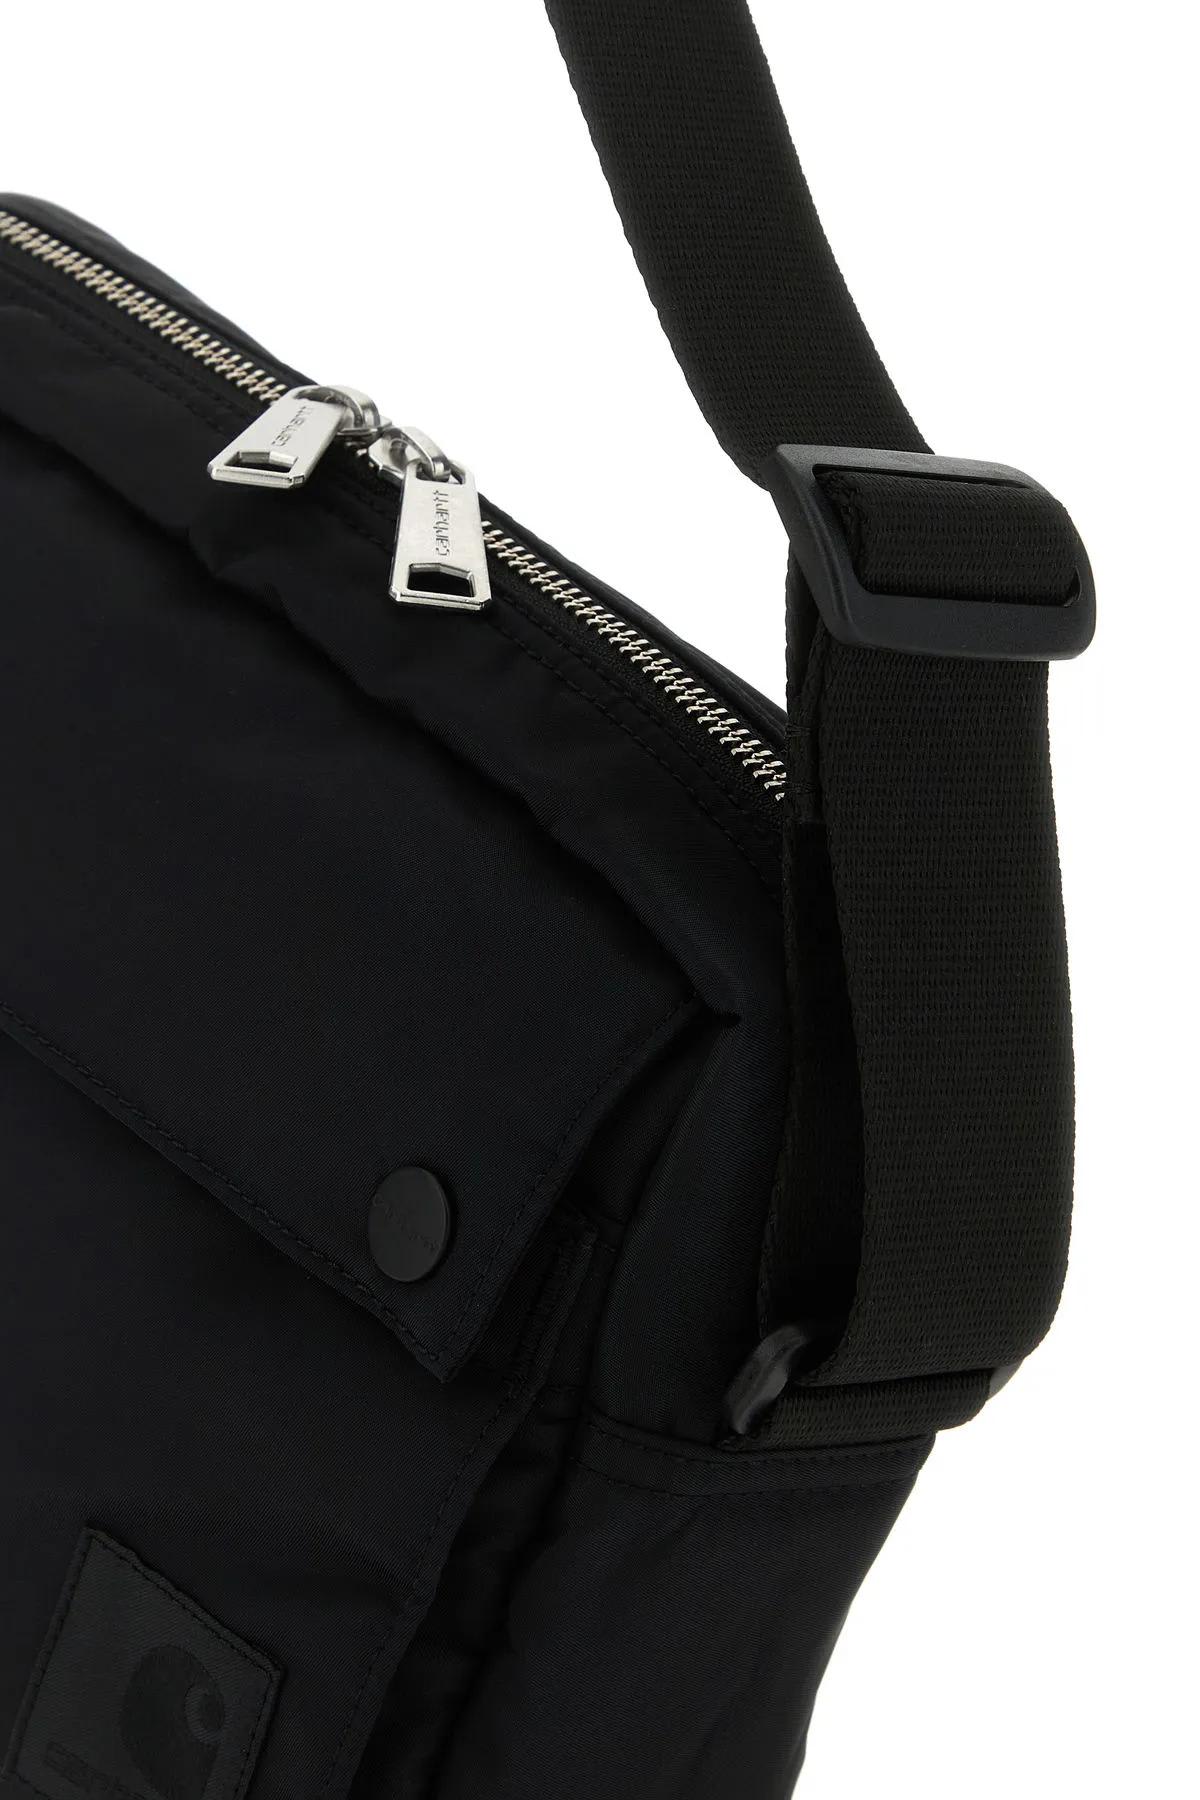 Shop Carhartt Black Fabric Otley Shoulder Bag